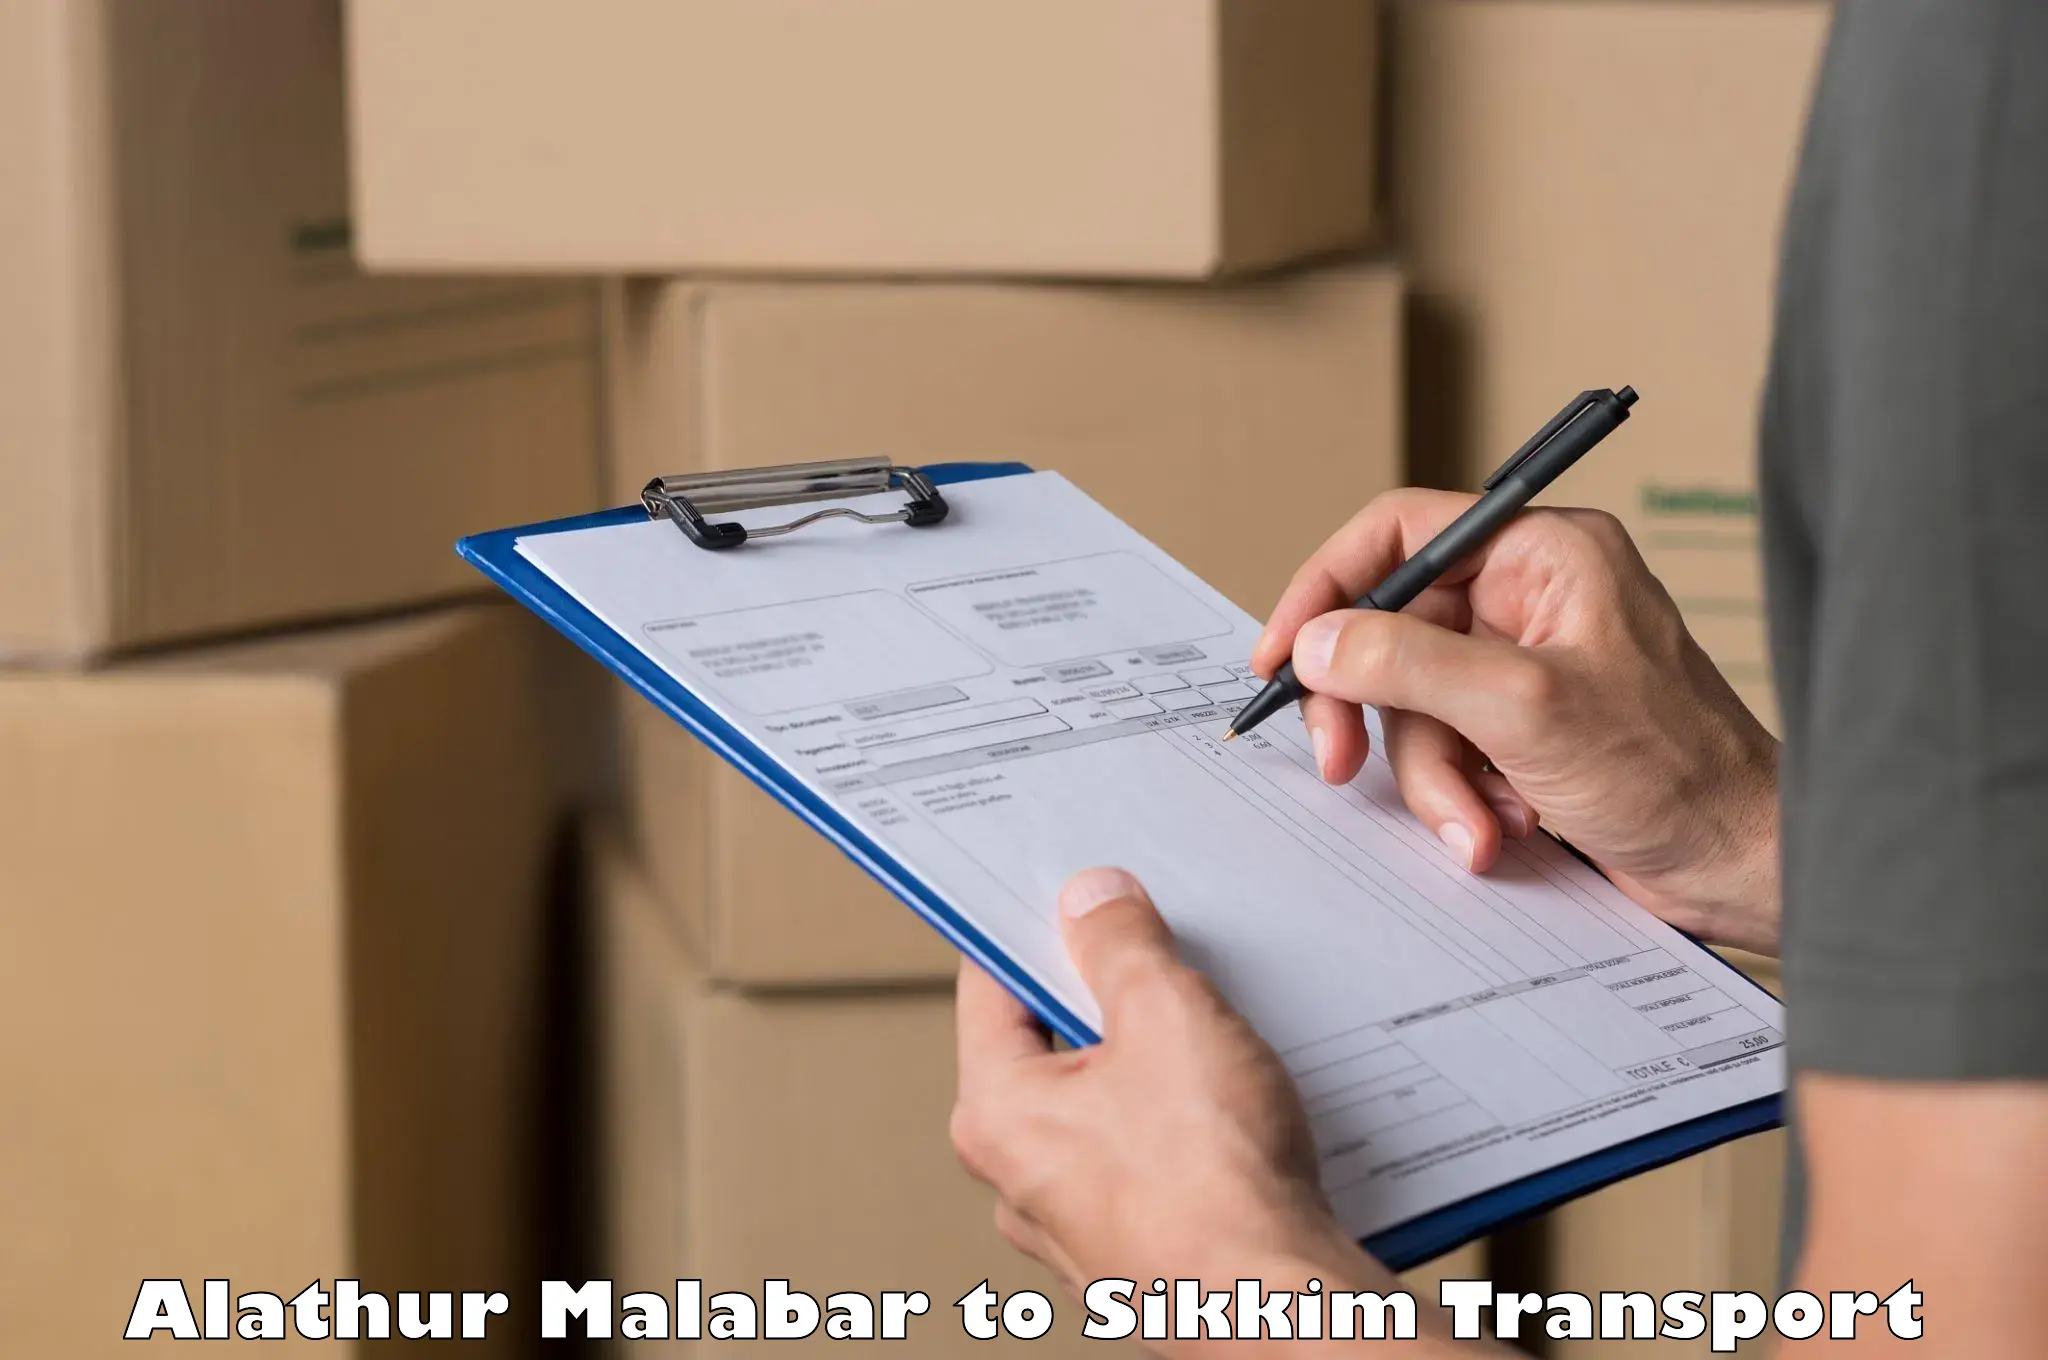 Truck transport companies in India Alathur Malabar to Sikkim